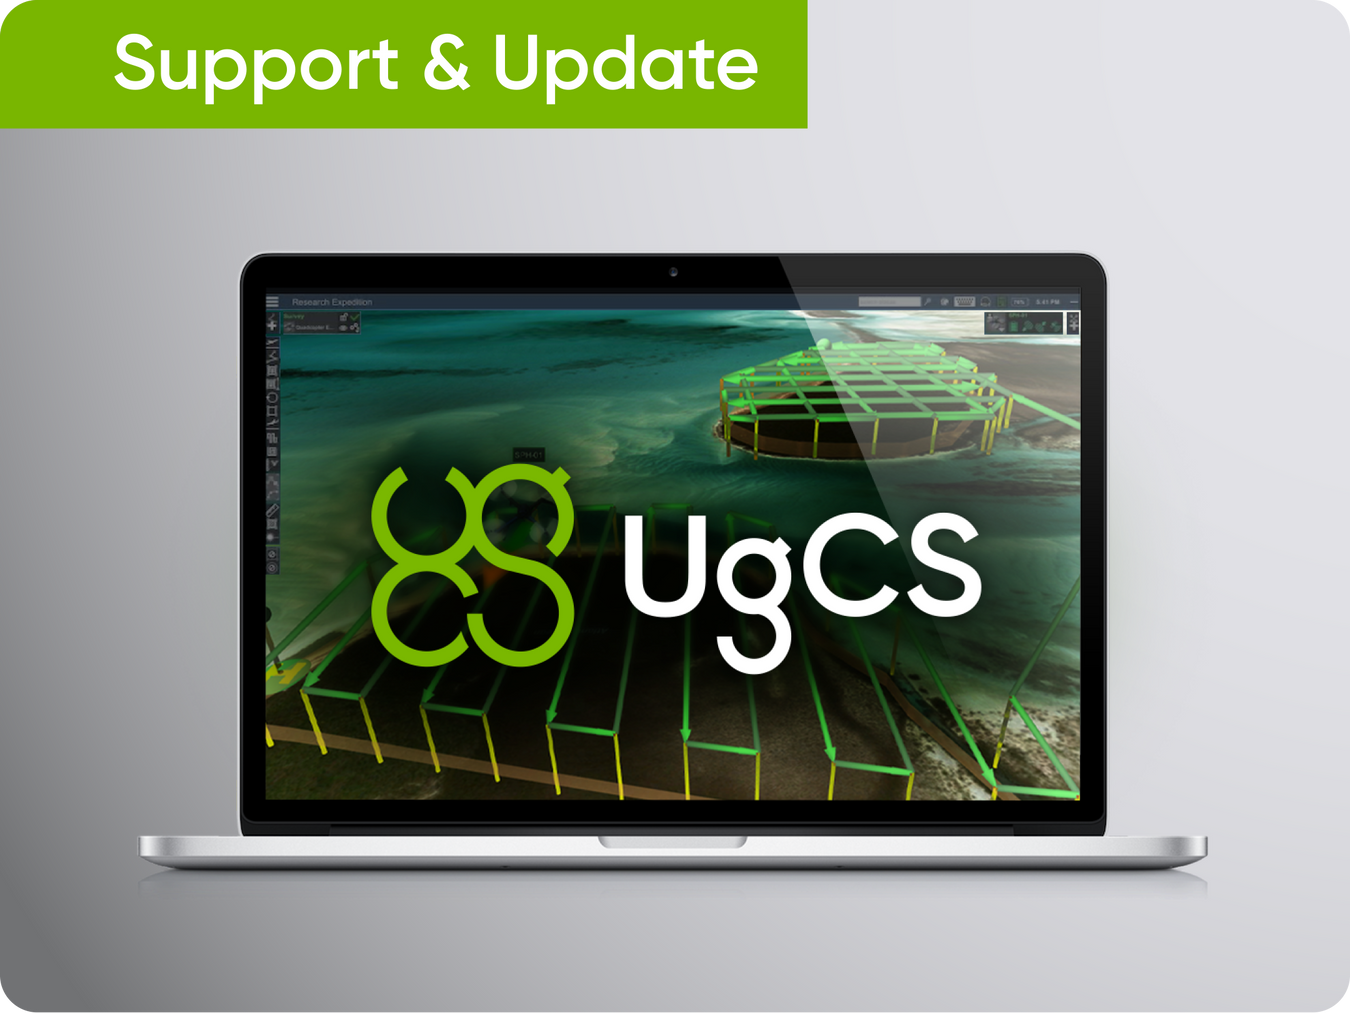 UgCS support & update packs